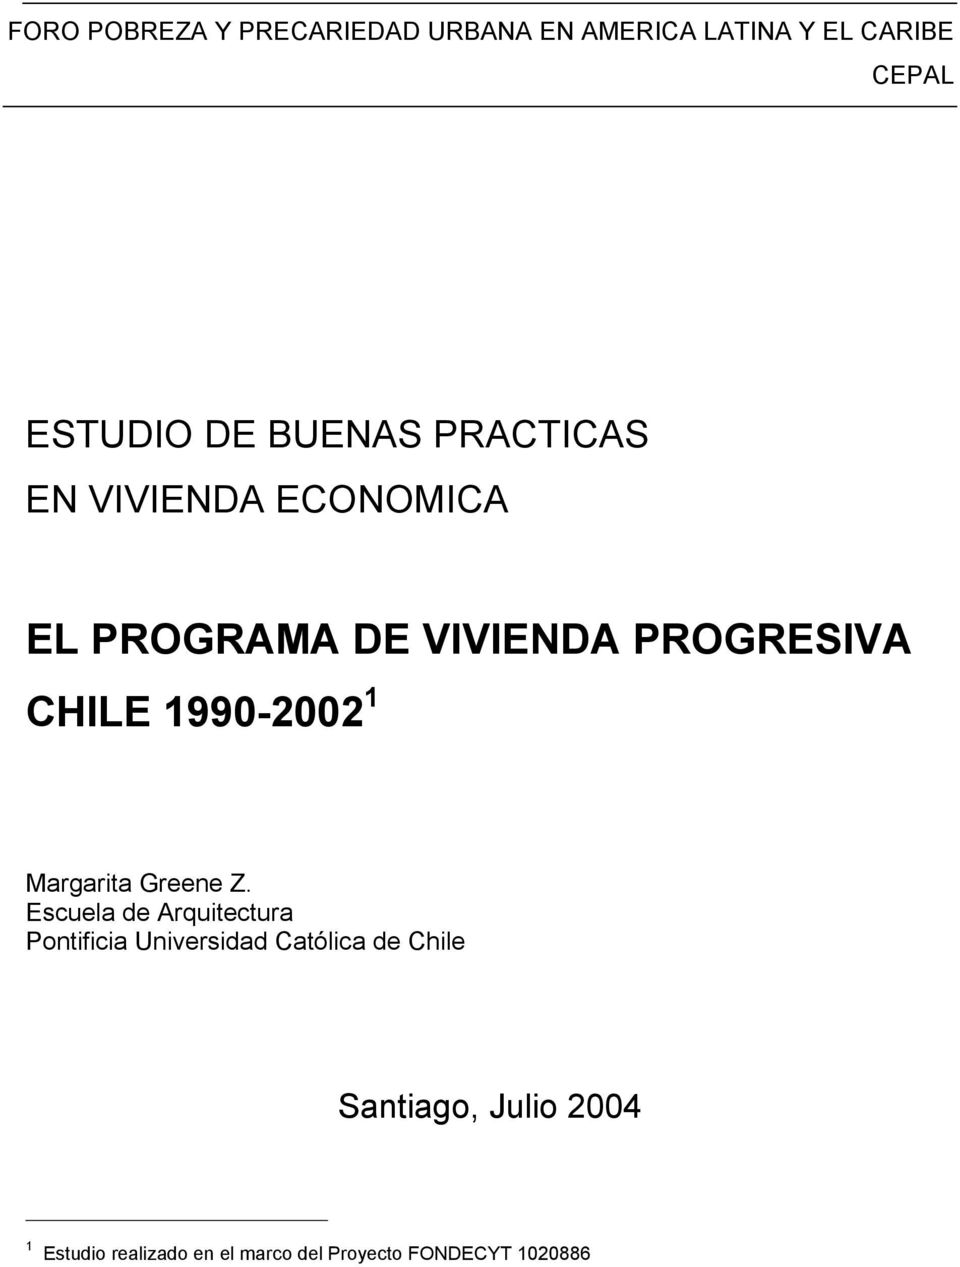 1990-2002 1 Margarita Greene Z.